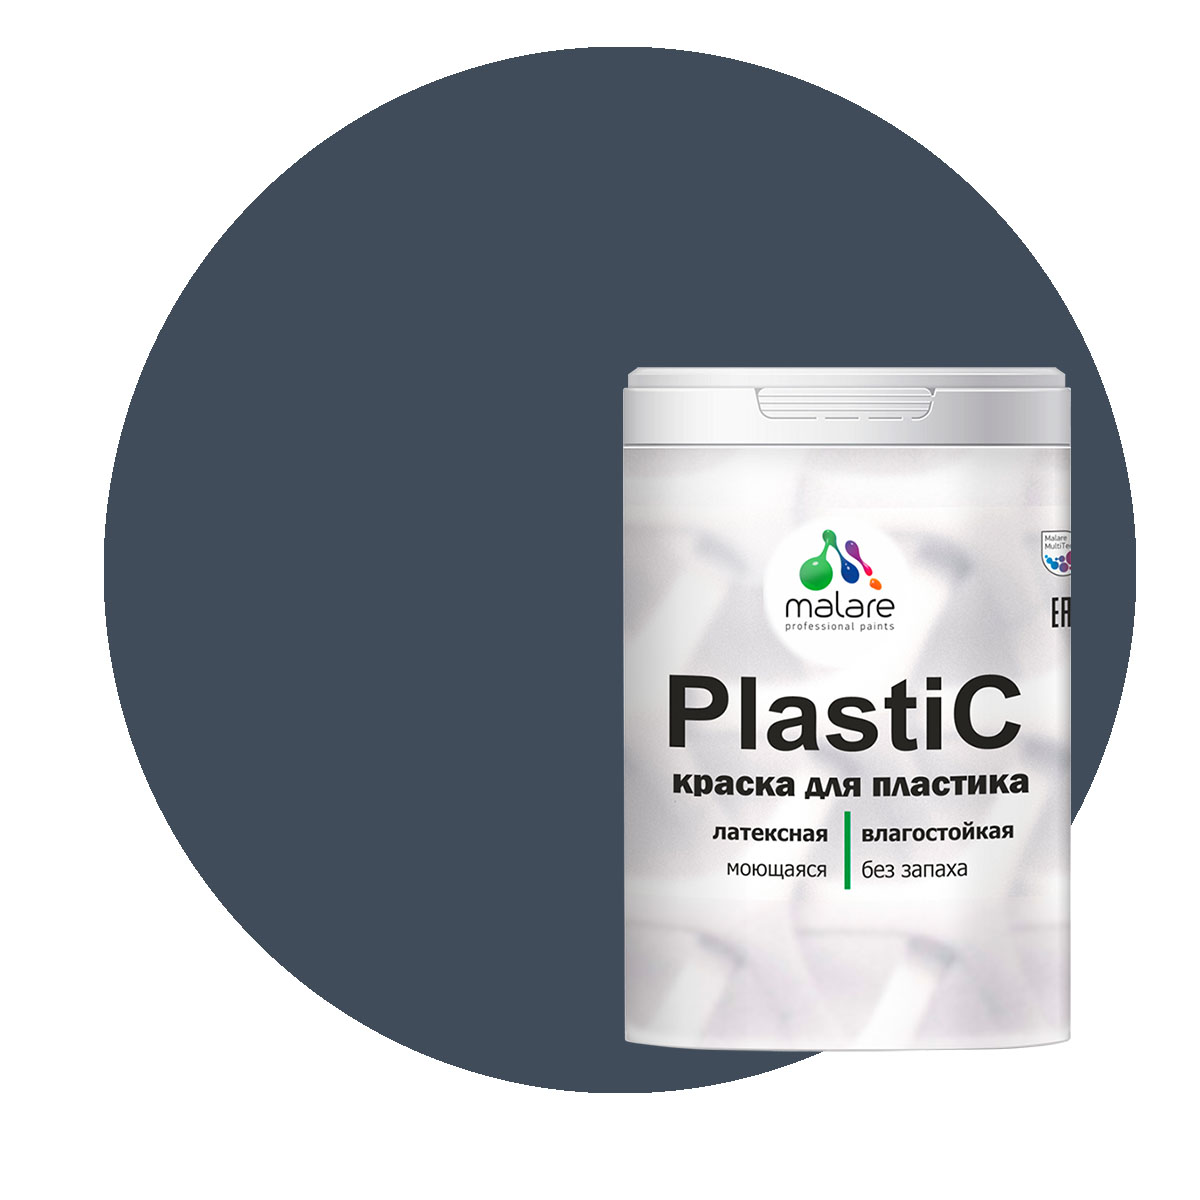 Краска Malare PlastiC для пластика, ПВХ, для сайдинга, гранитный, 2 кг. краска malare plastic для пластика пвх для сайдинга темно серый 1 кг